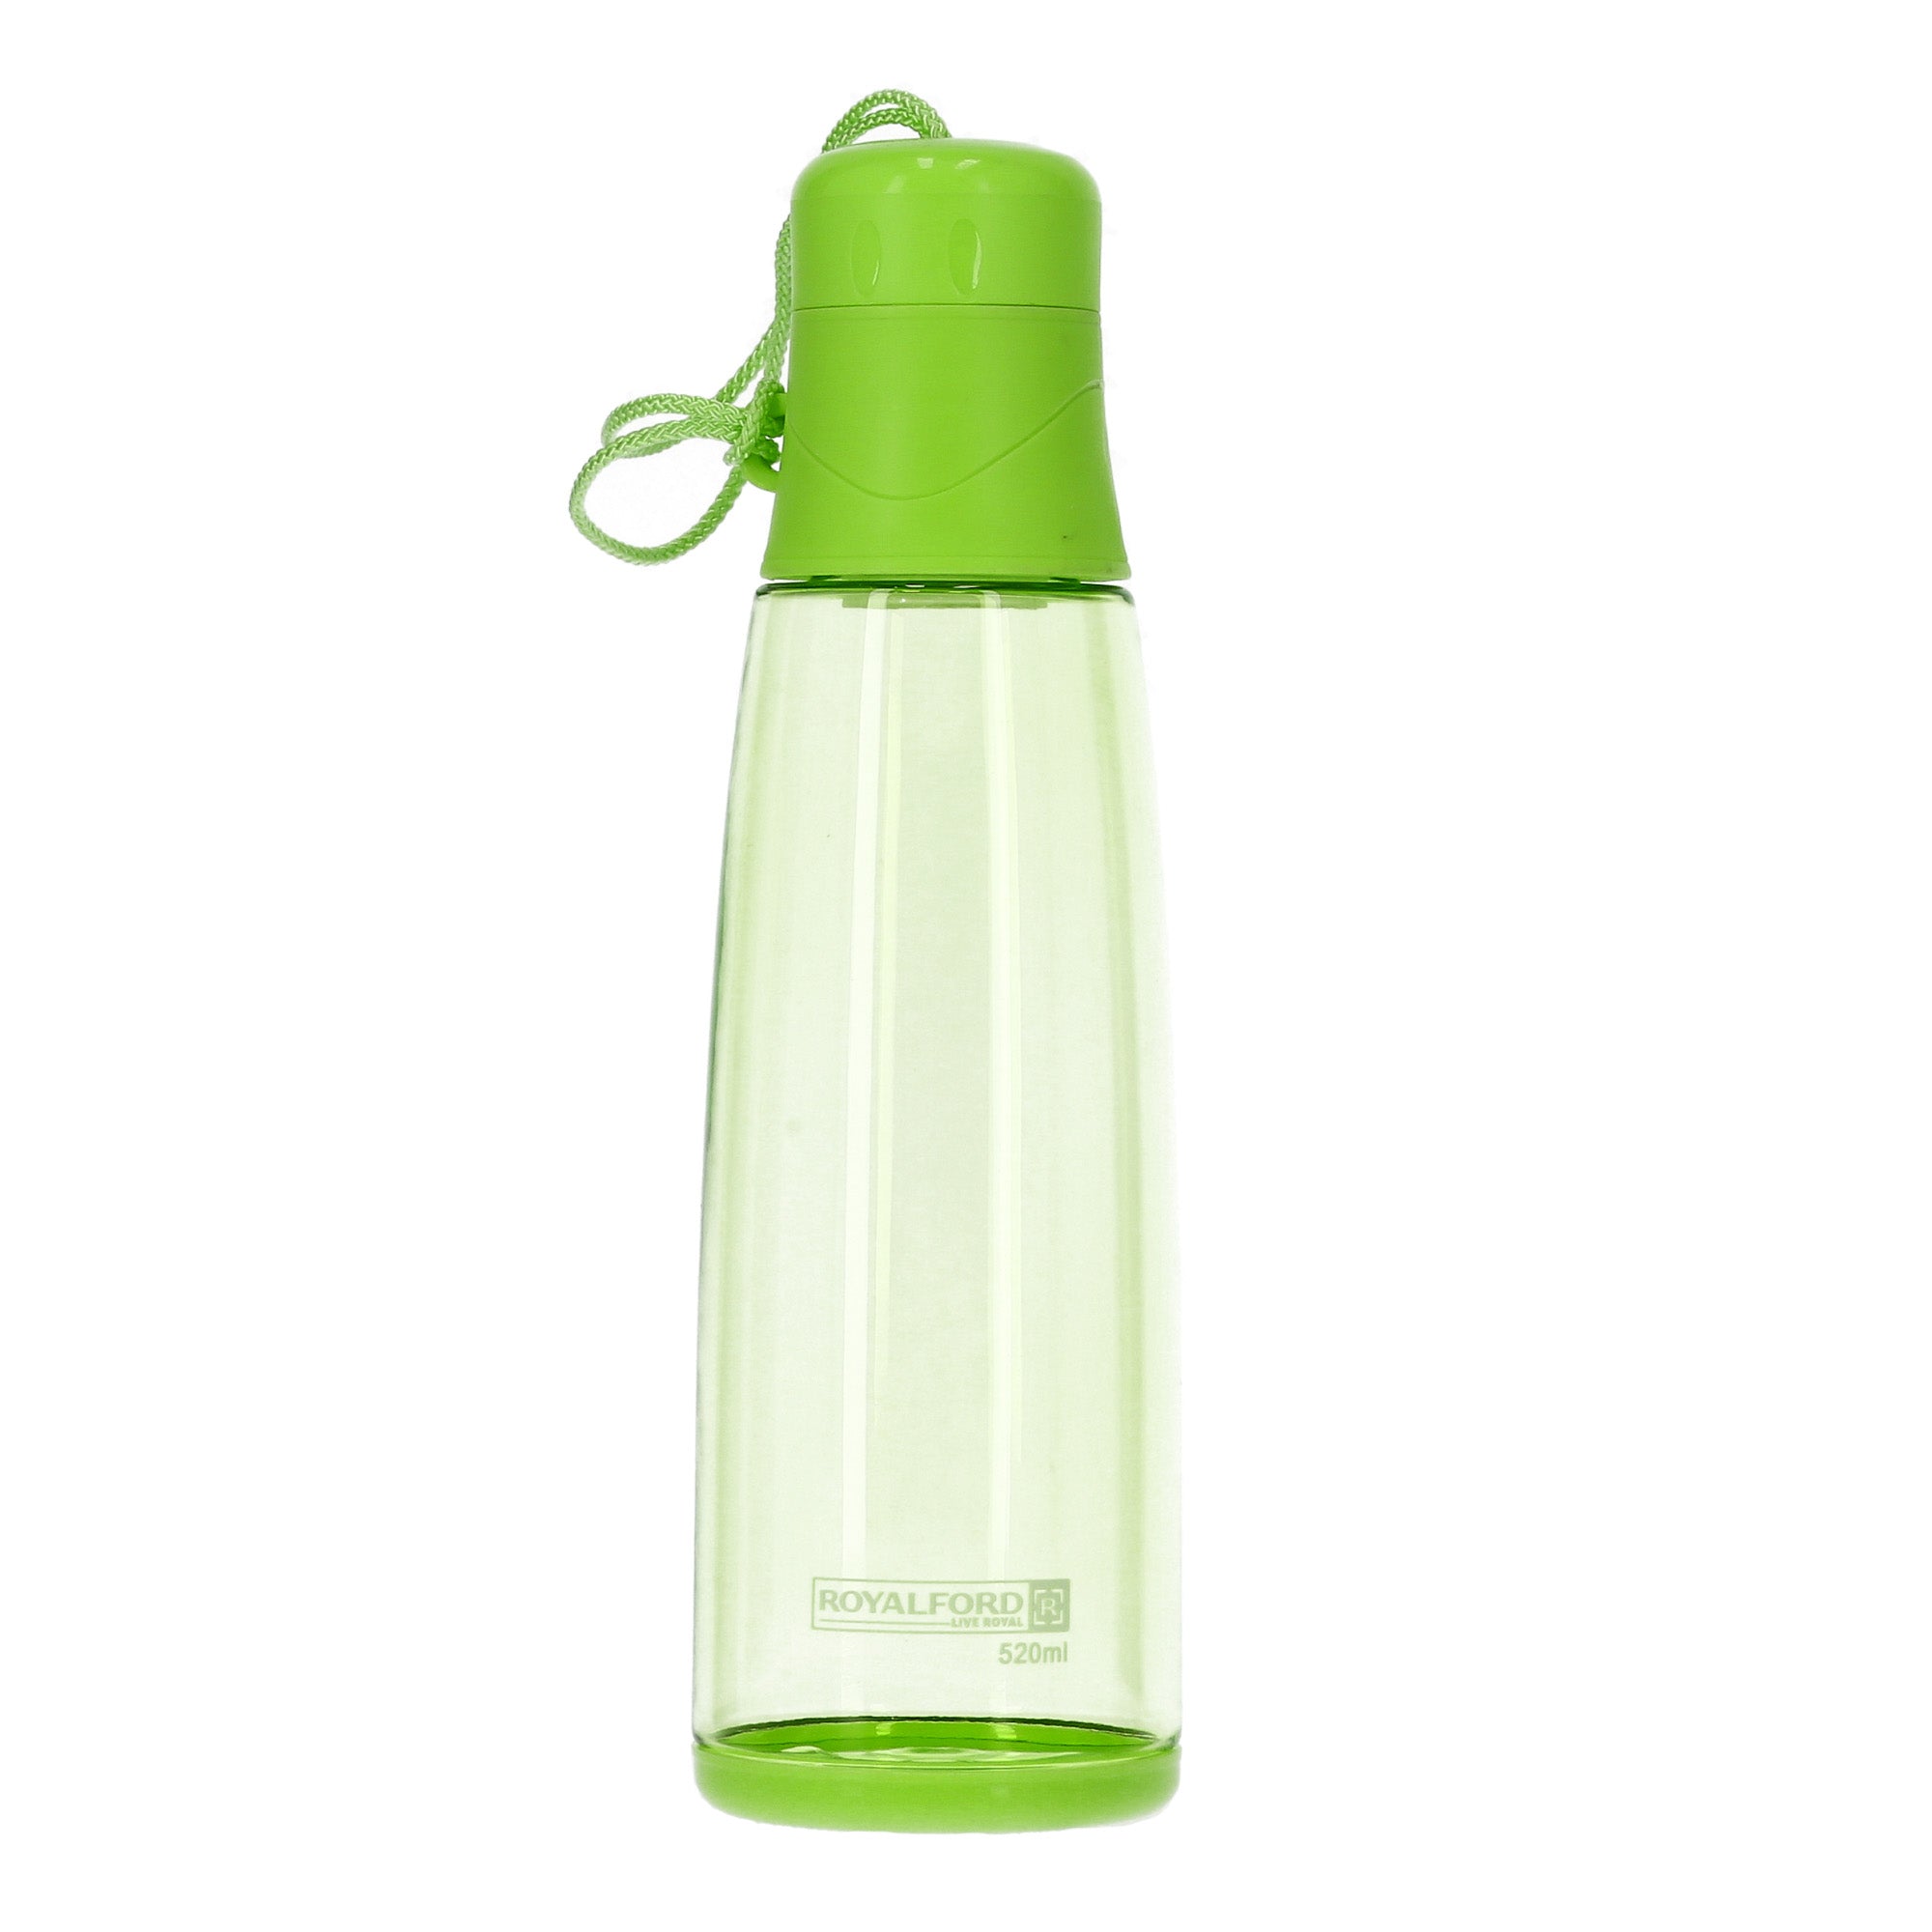 Royalford Water Bottle Green 520ml